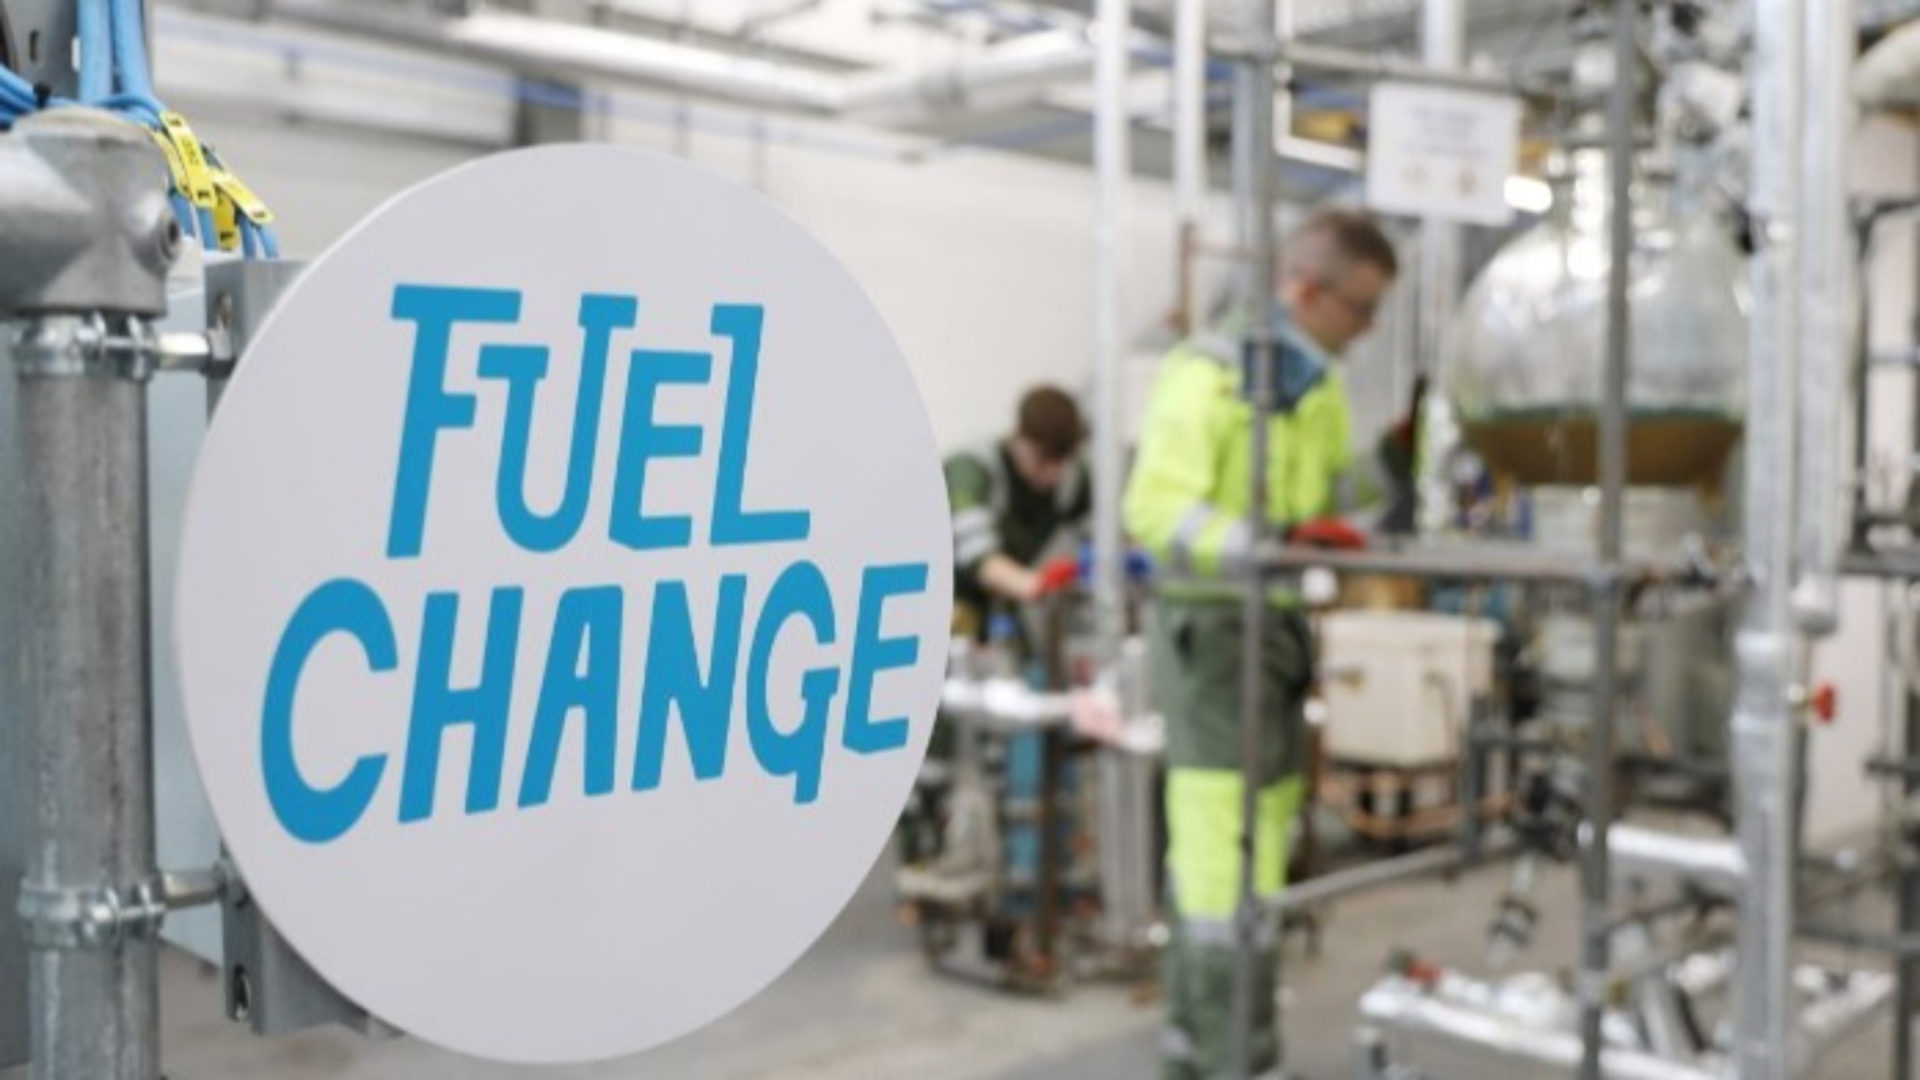 Image: Fuel Change